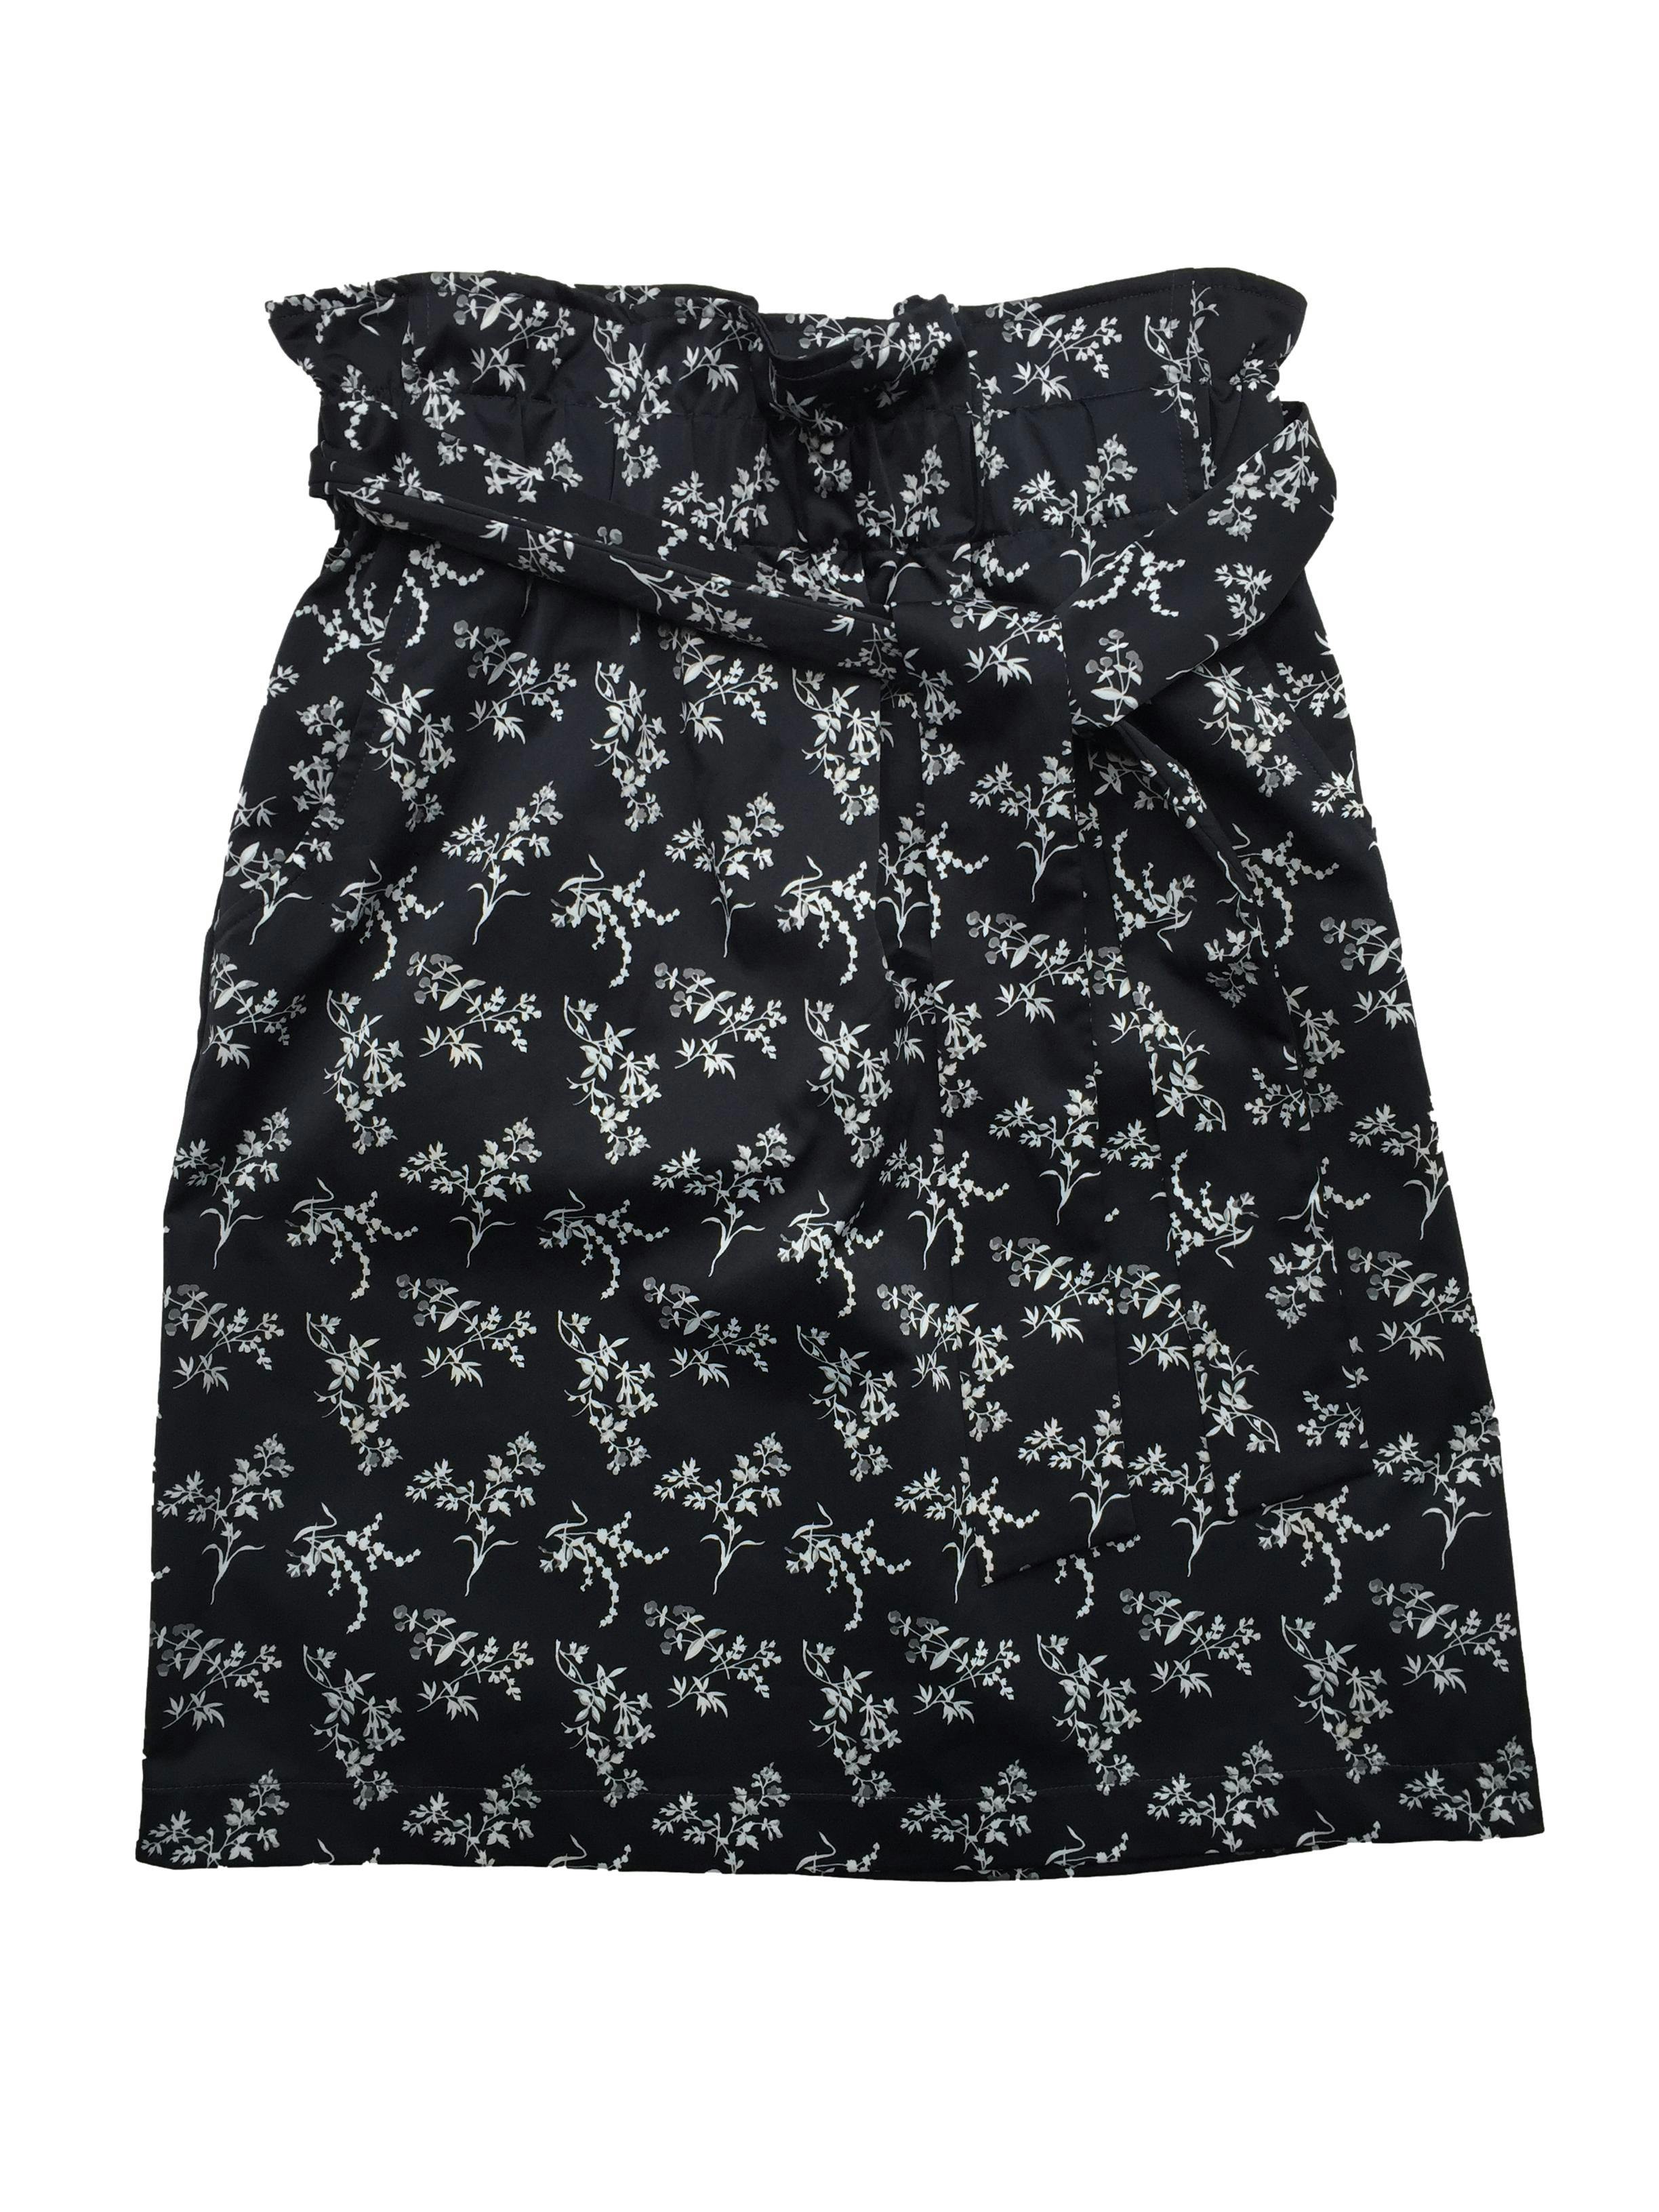 Falda H&M negra con flores blancas, cintura paper bag, bolsillos laterales, tela gabardina. Cintura 66cm Largo 58cm